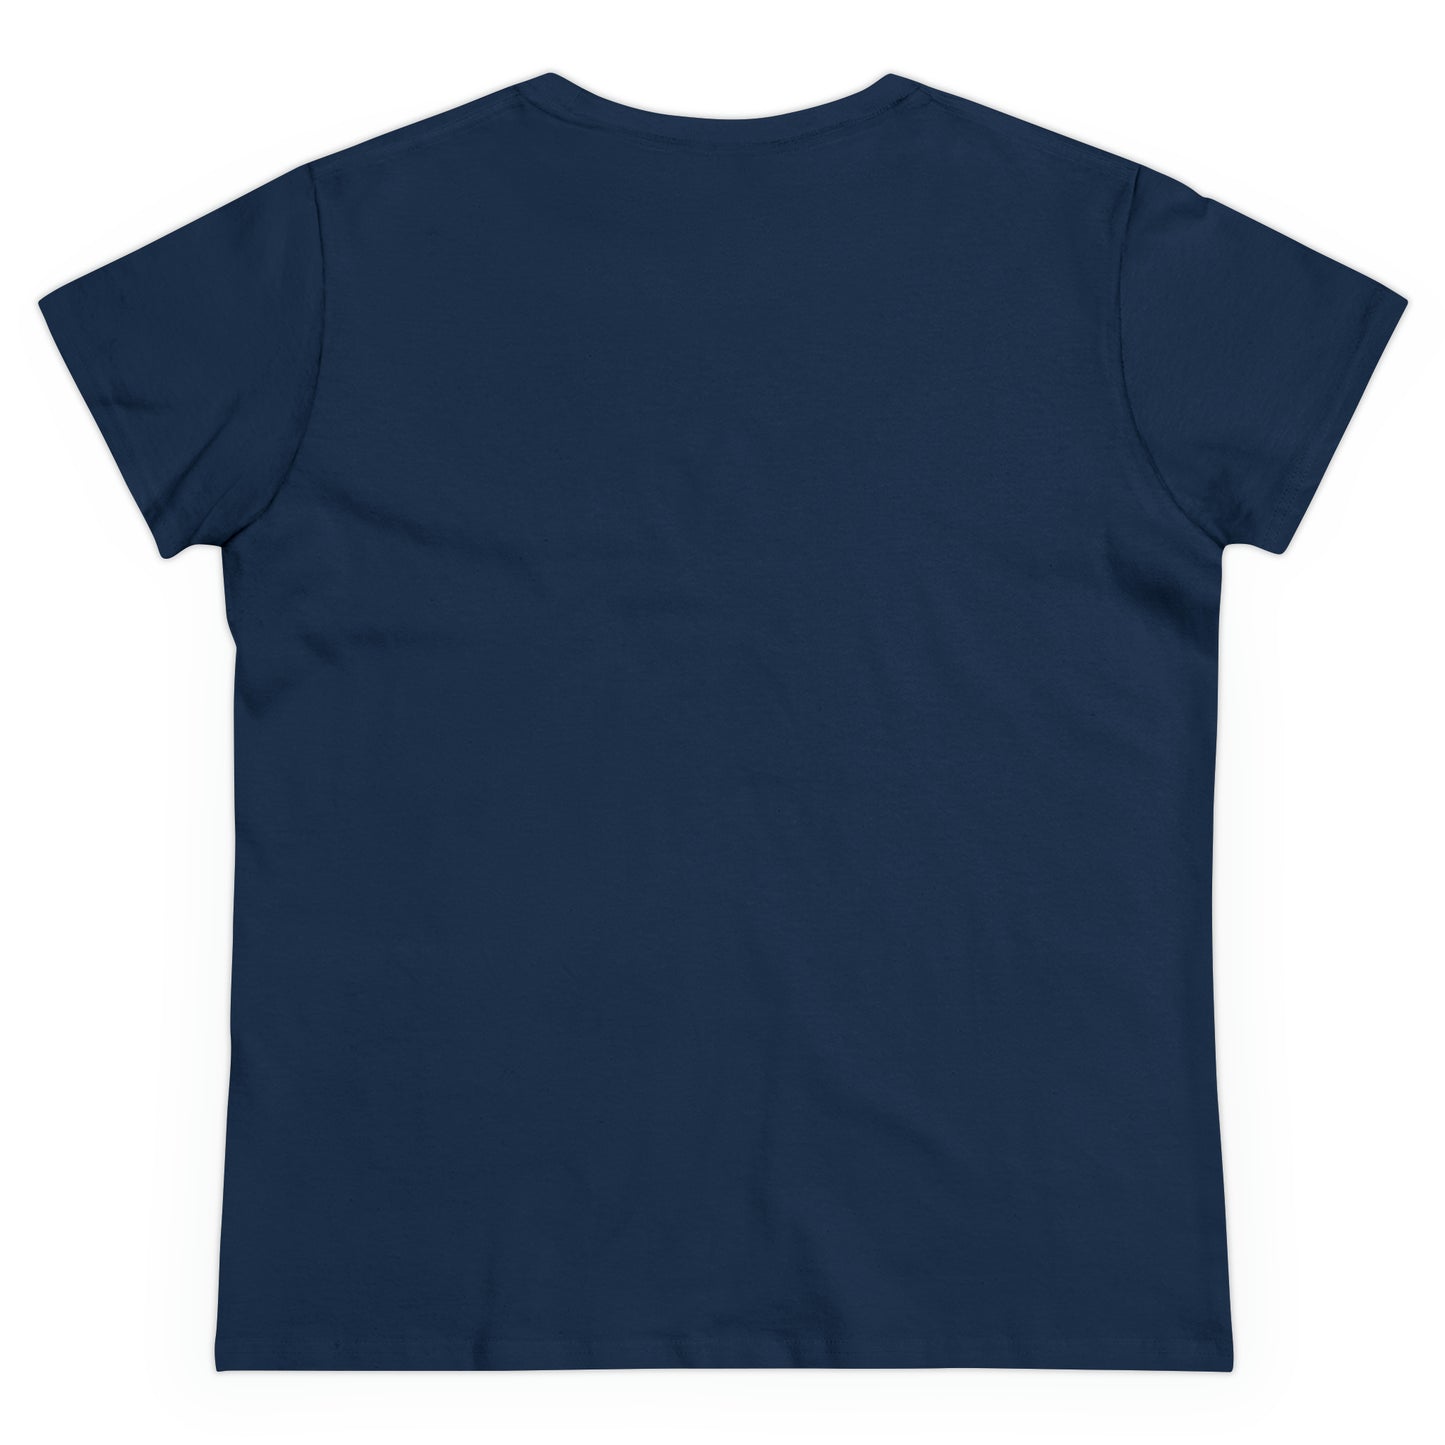 Women's Sunflower T-shirt: Heavy Cotton; 3 colors; Gildan